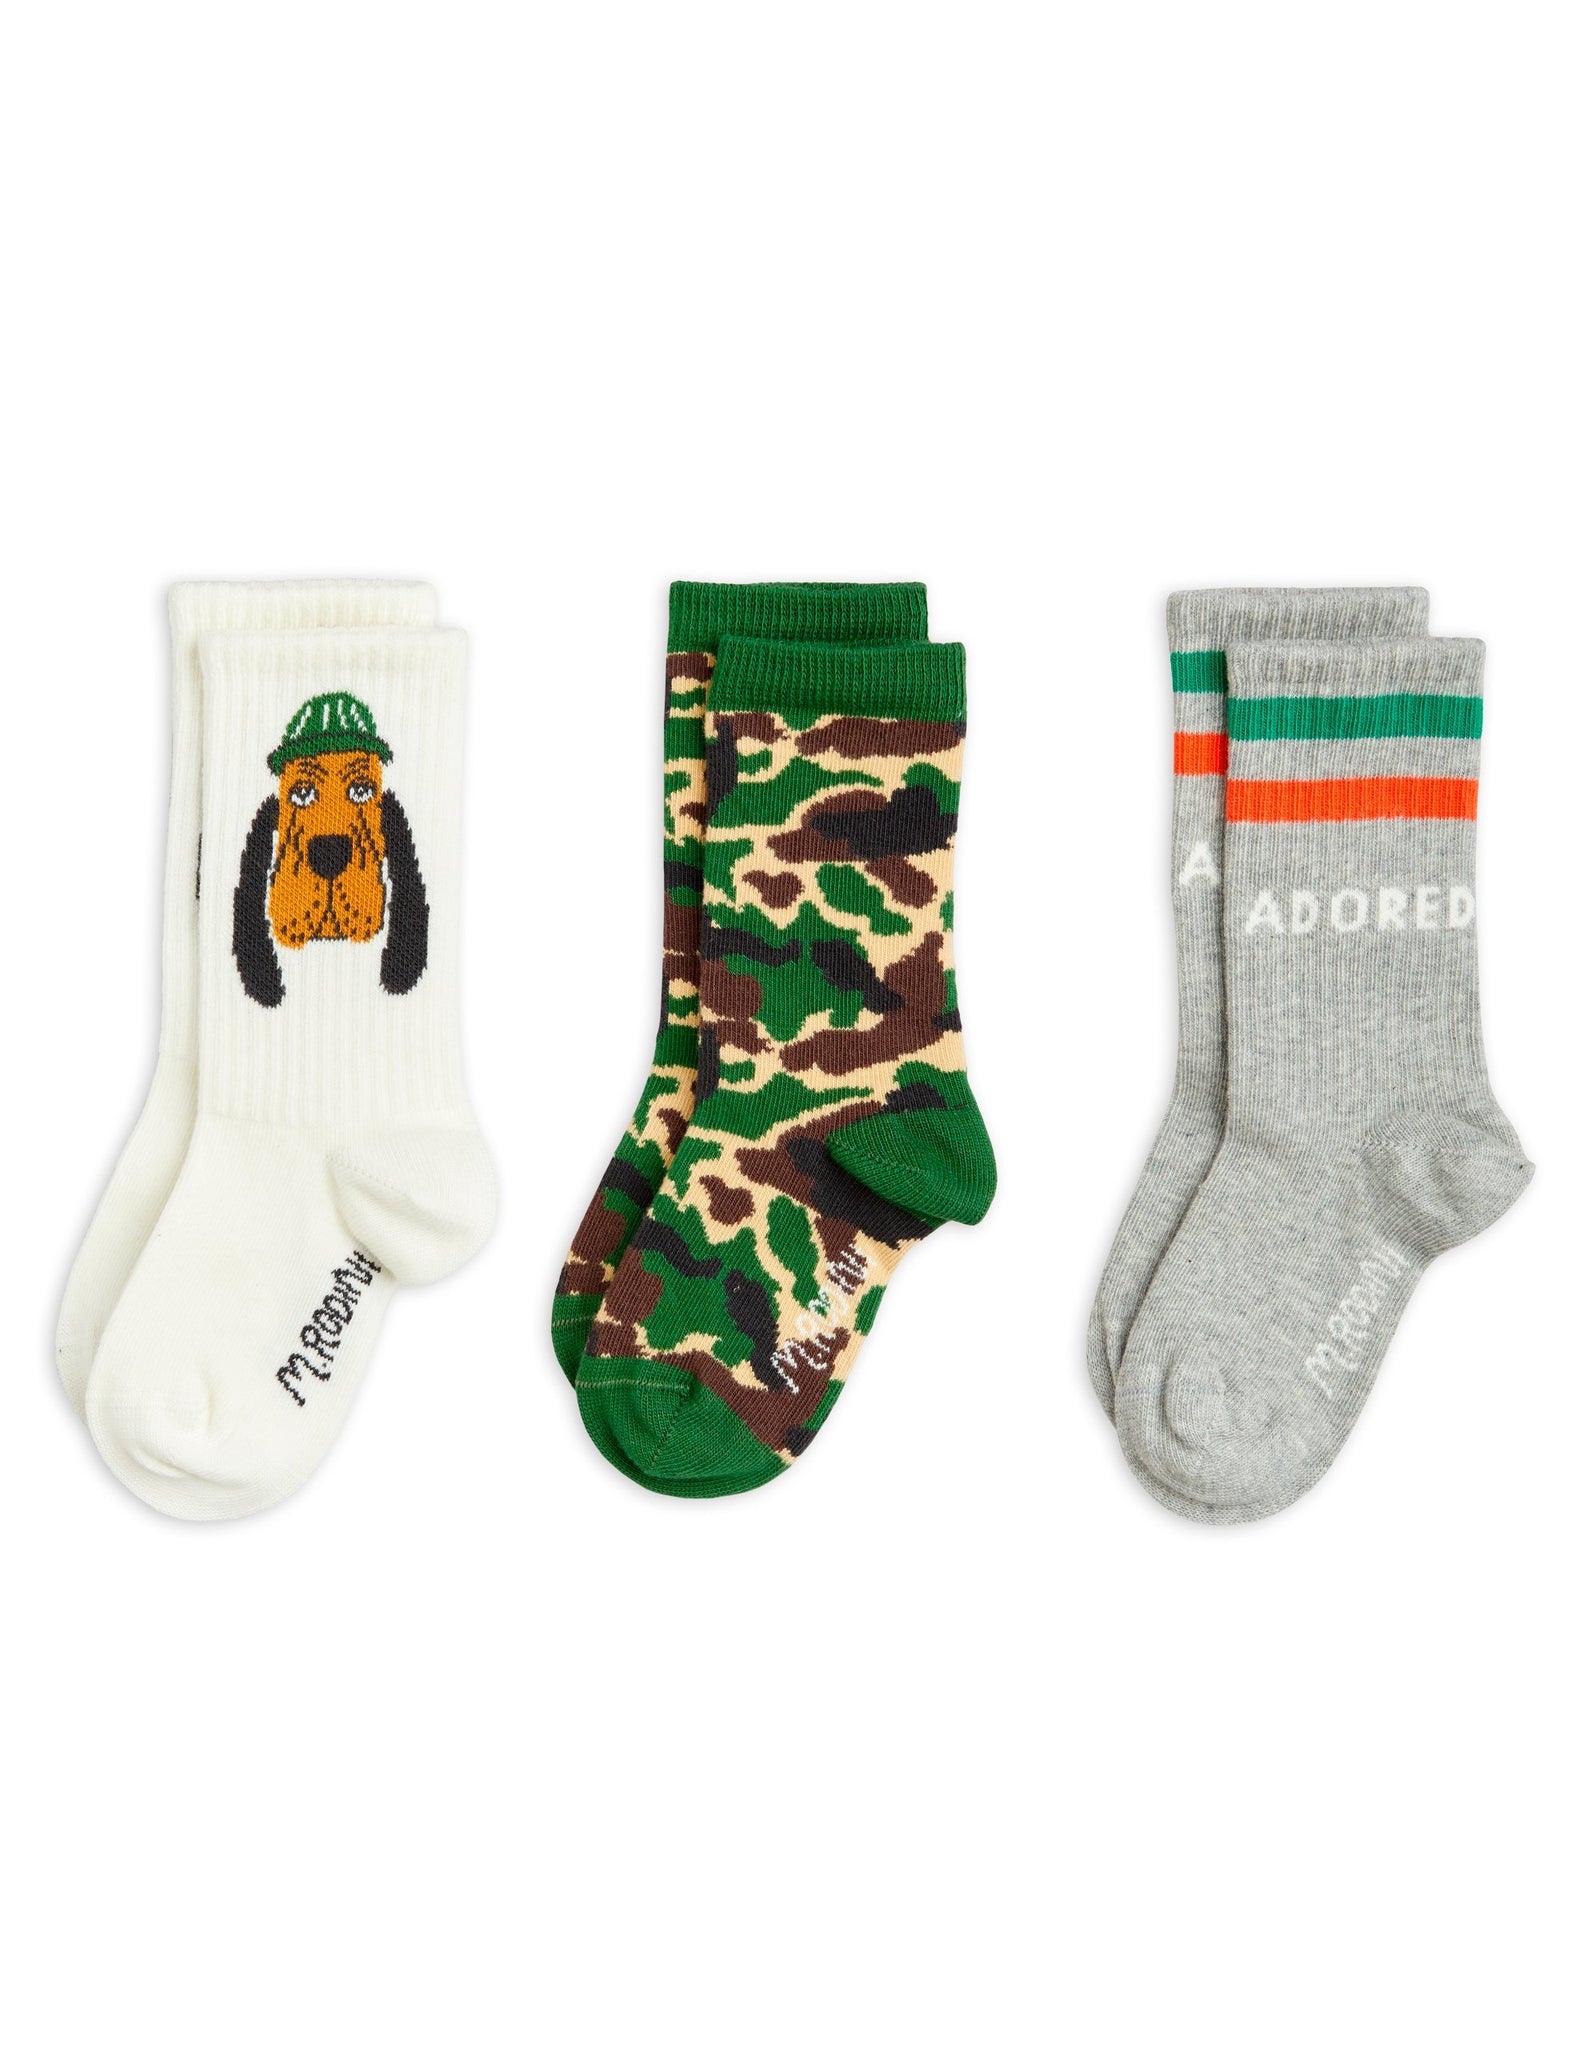 Bloodhound 3-pack socks